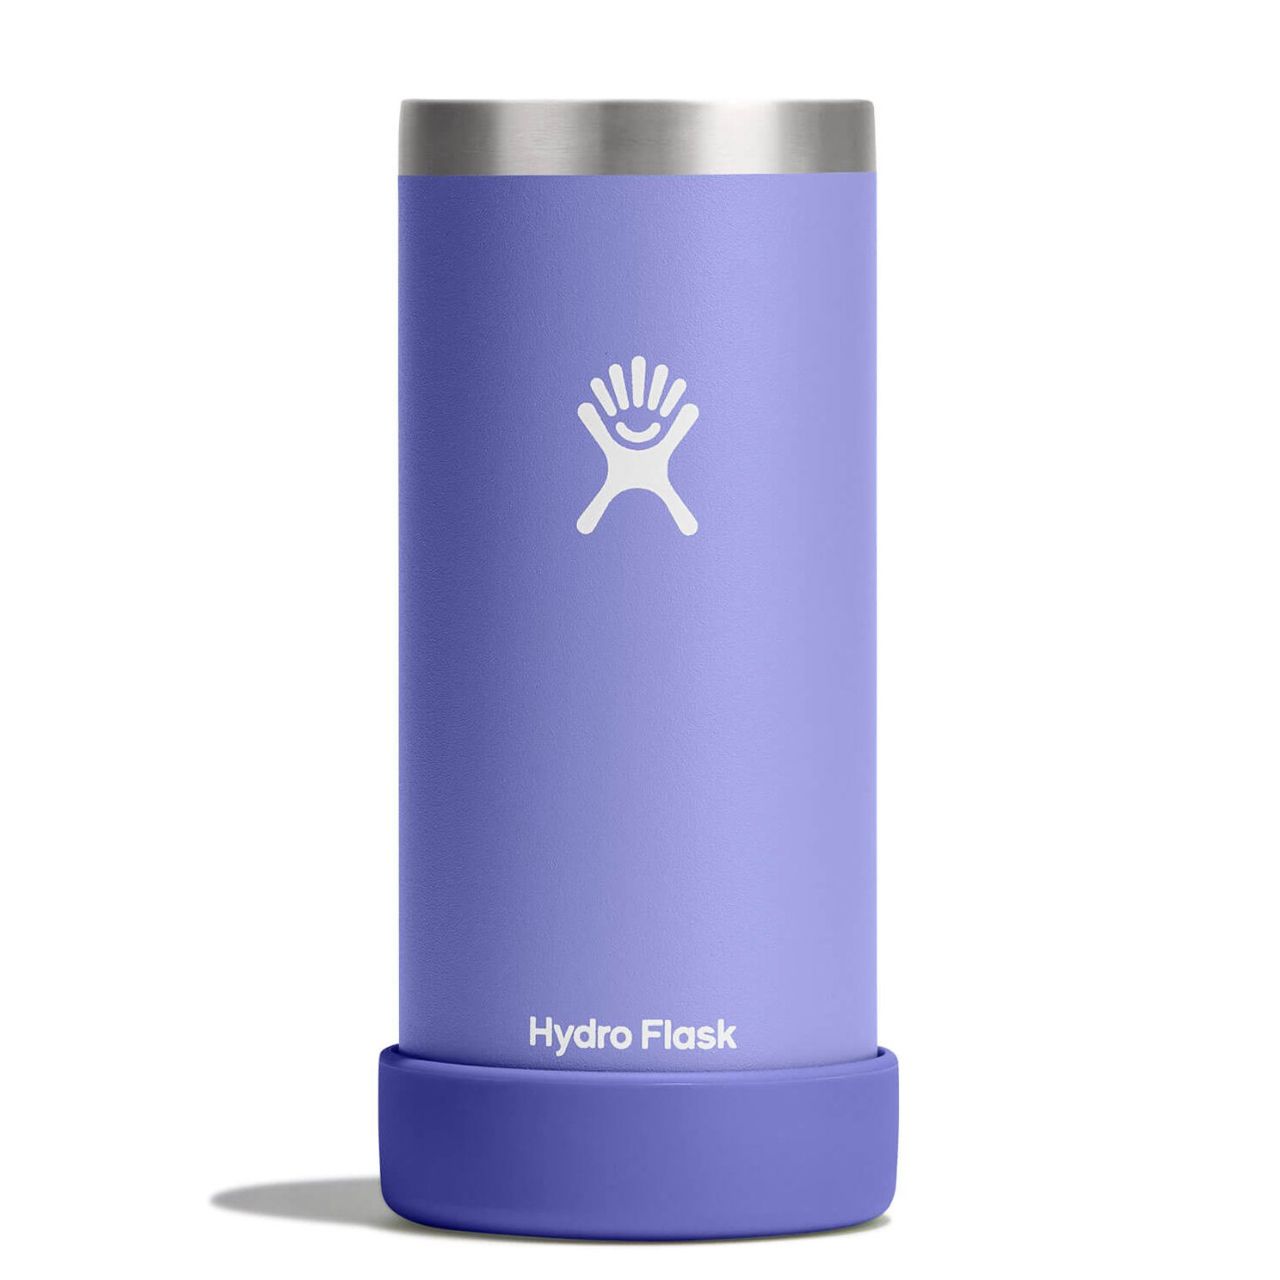 NEW! HydroFlask 12-OZ SLIM COOLER CUPS SET OF 2 — Laguna & White — $50  Value!